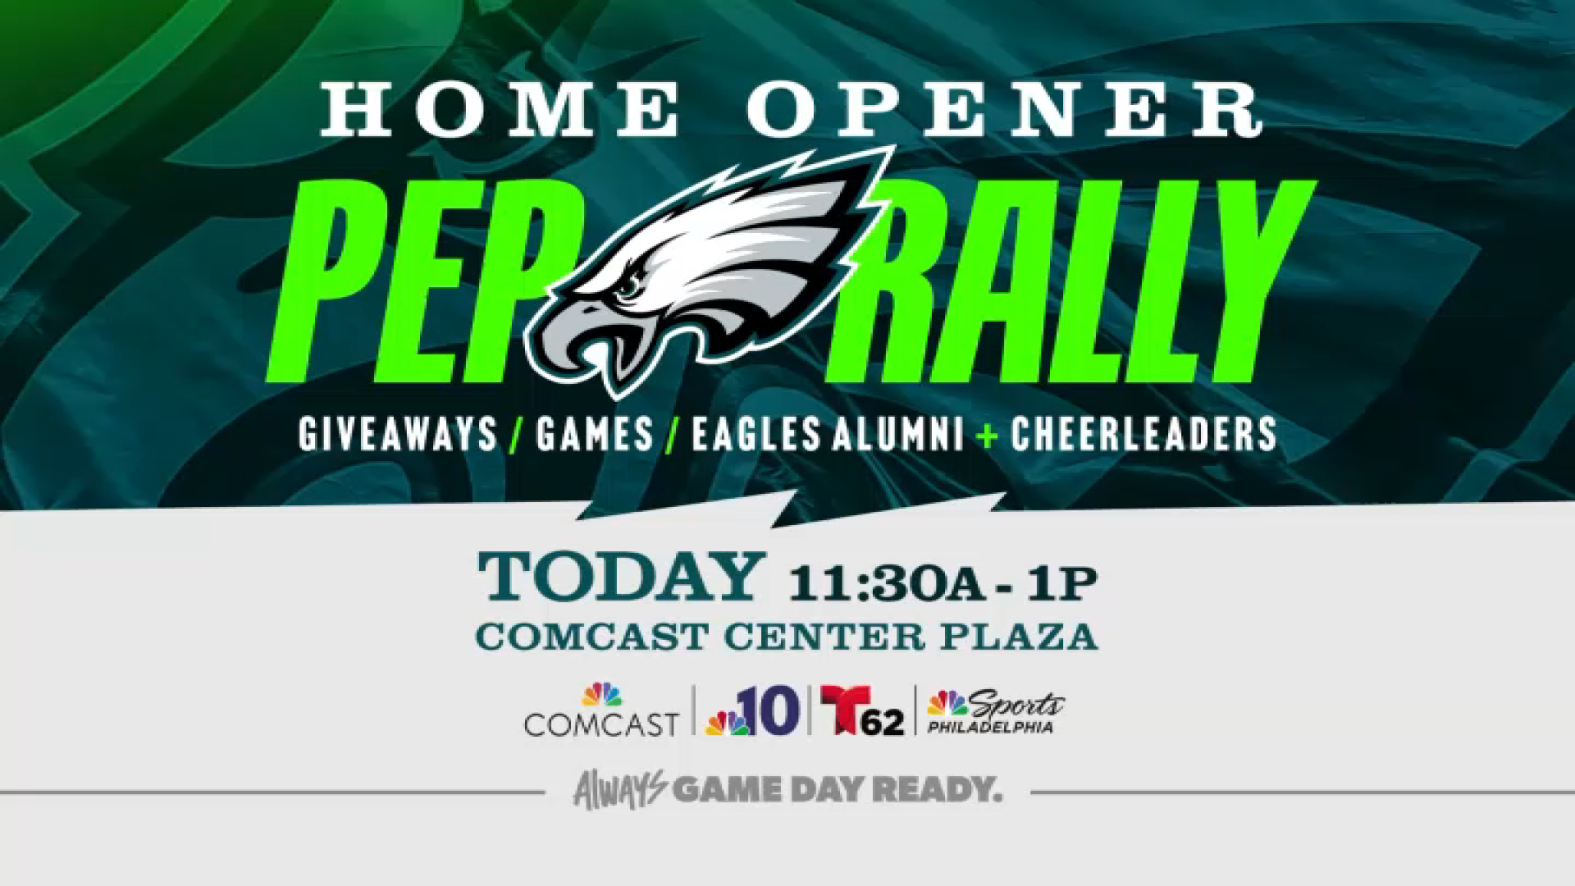 Philadelphia Eagles home opener pep rally. Details on free fun NBC10